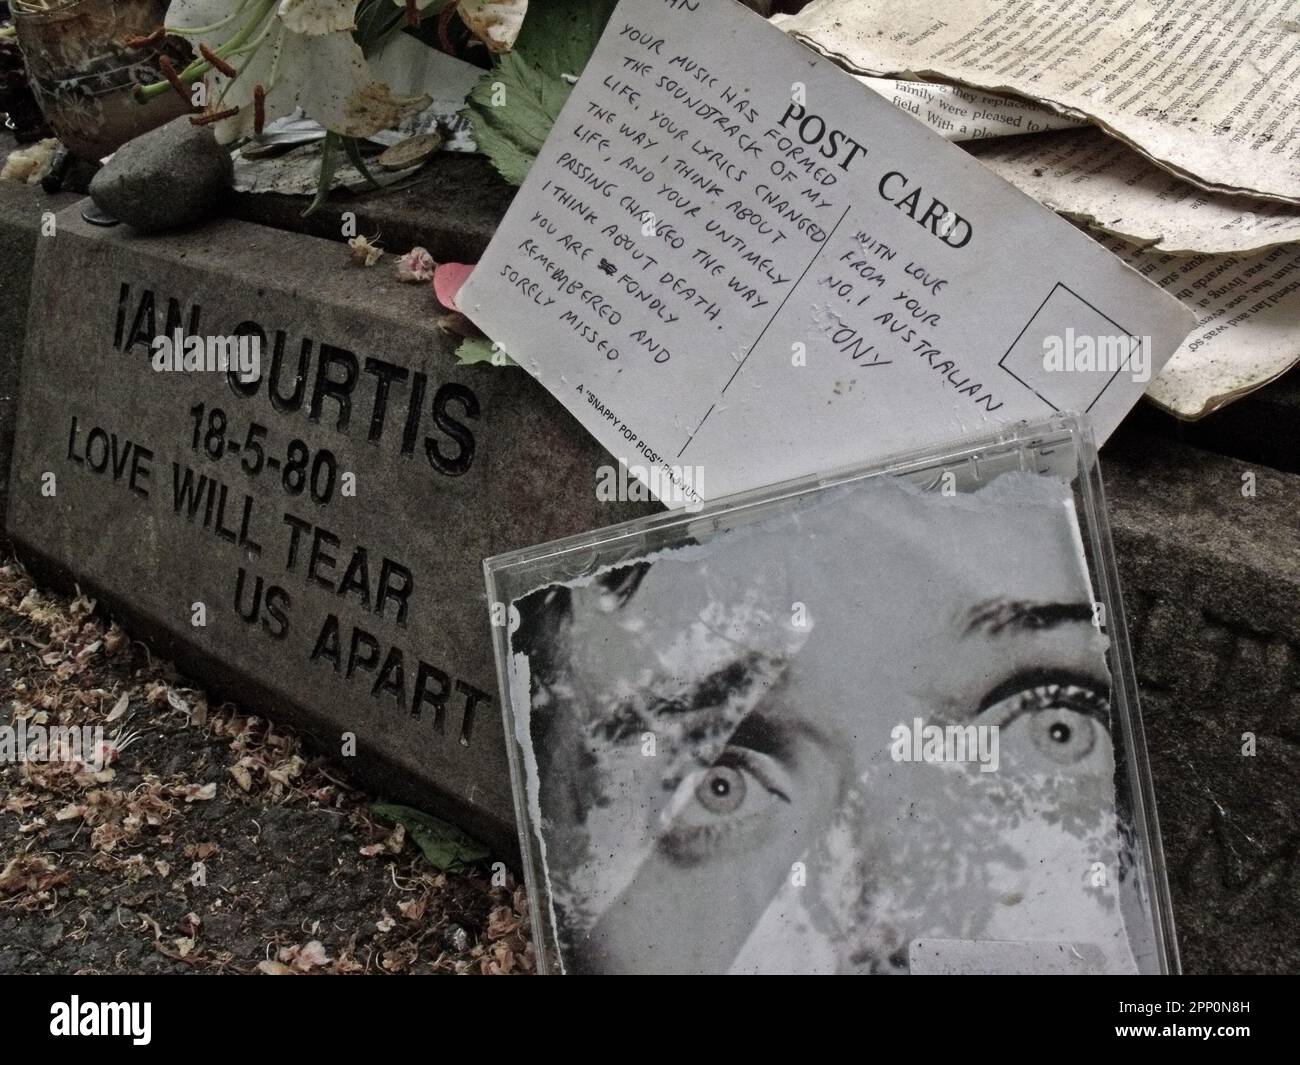 Ian Curtis 18-5-80 Love Will Tear Us Apart, memorial stone, Macclesfield Crematorium, Cheshire, England, UK Stock Photo